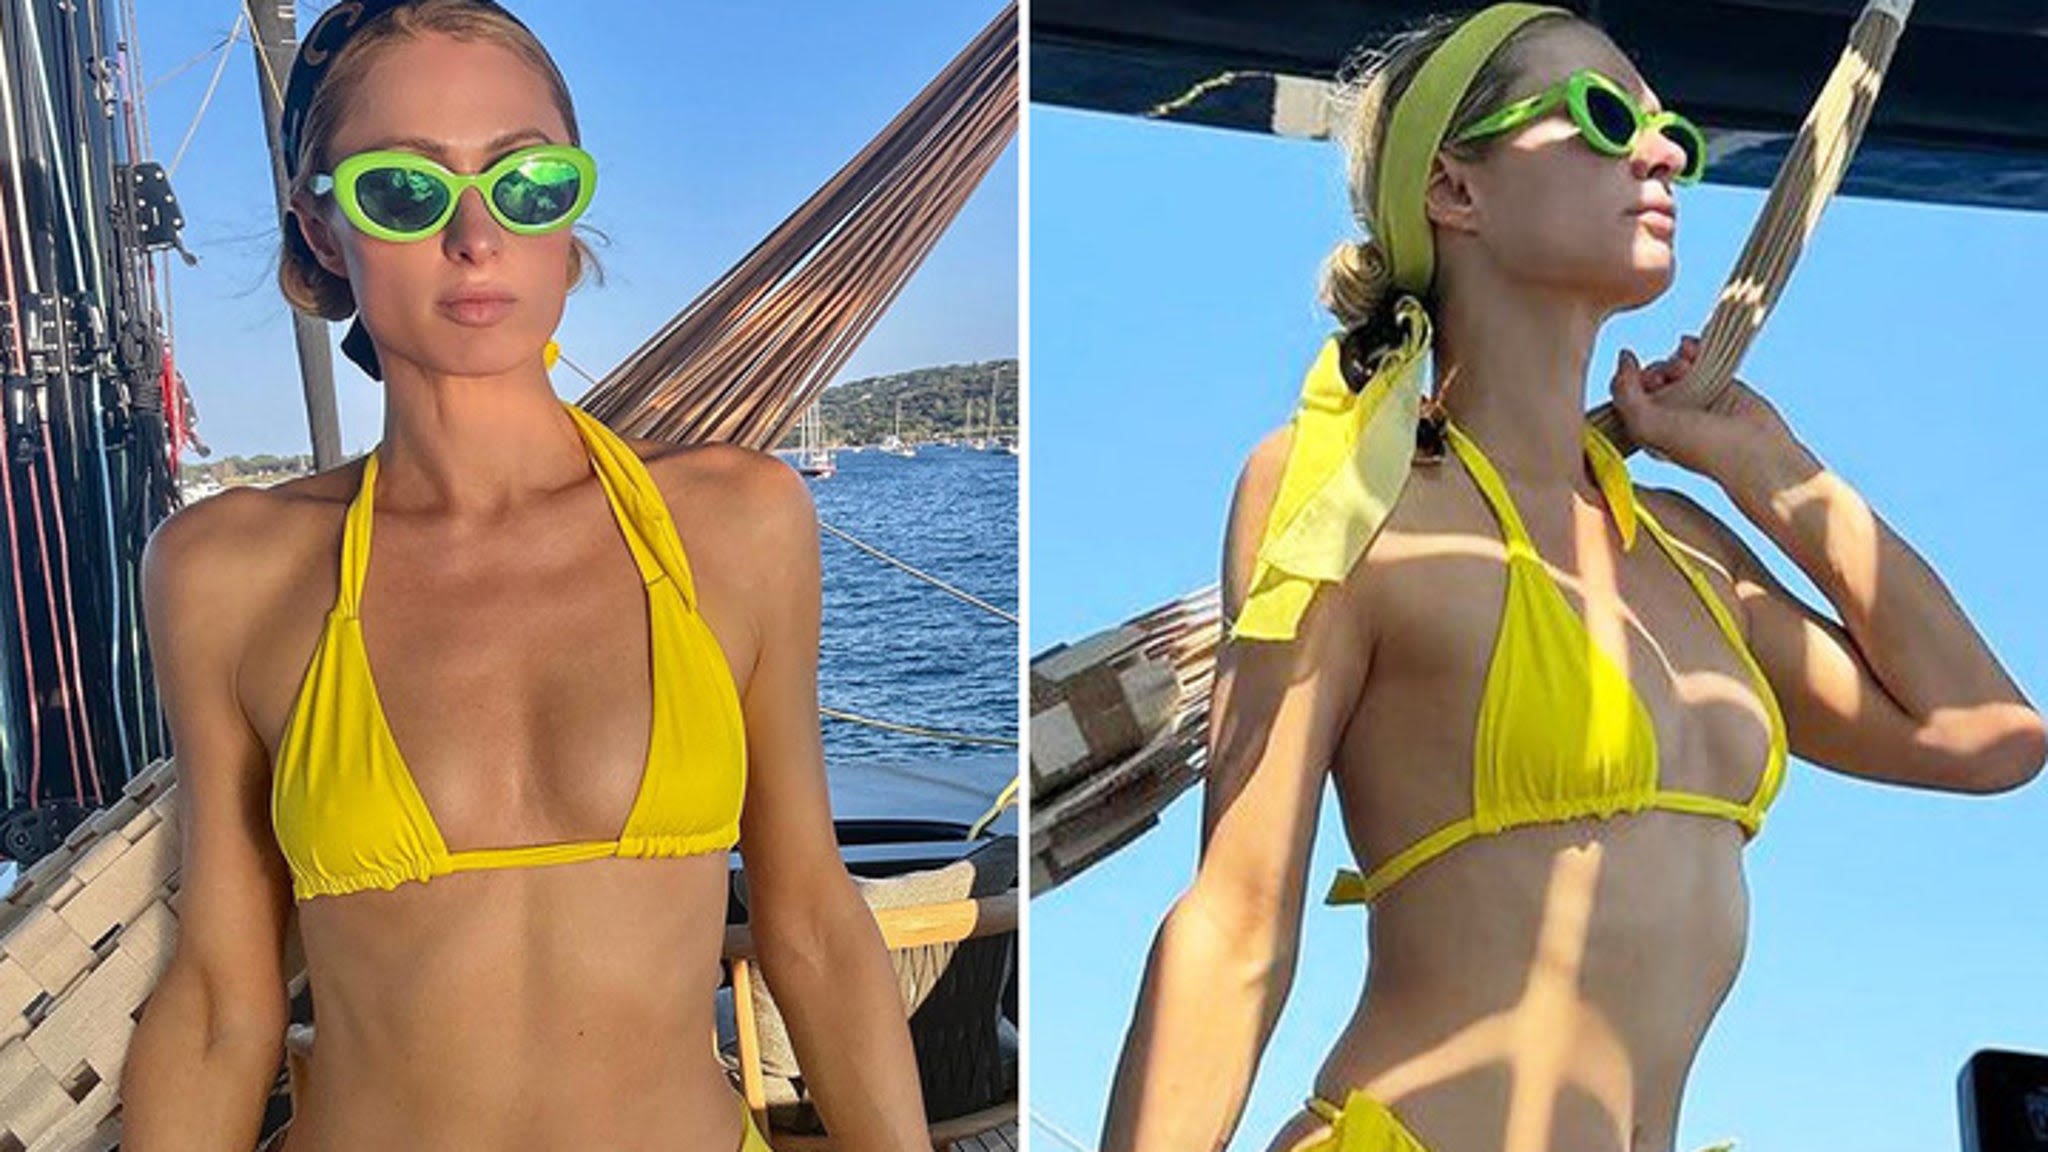 Paris Hilton Sliving In Yellow Bikini ... That's Hot!